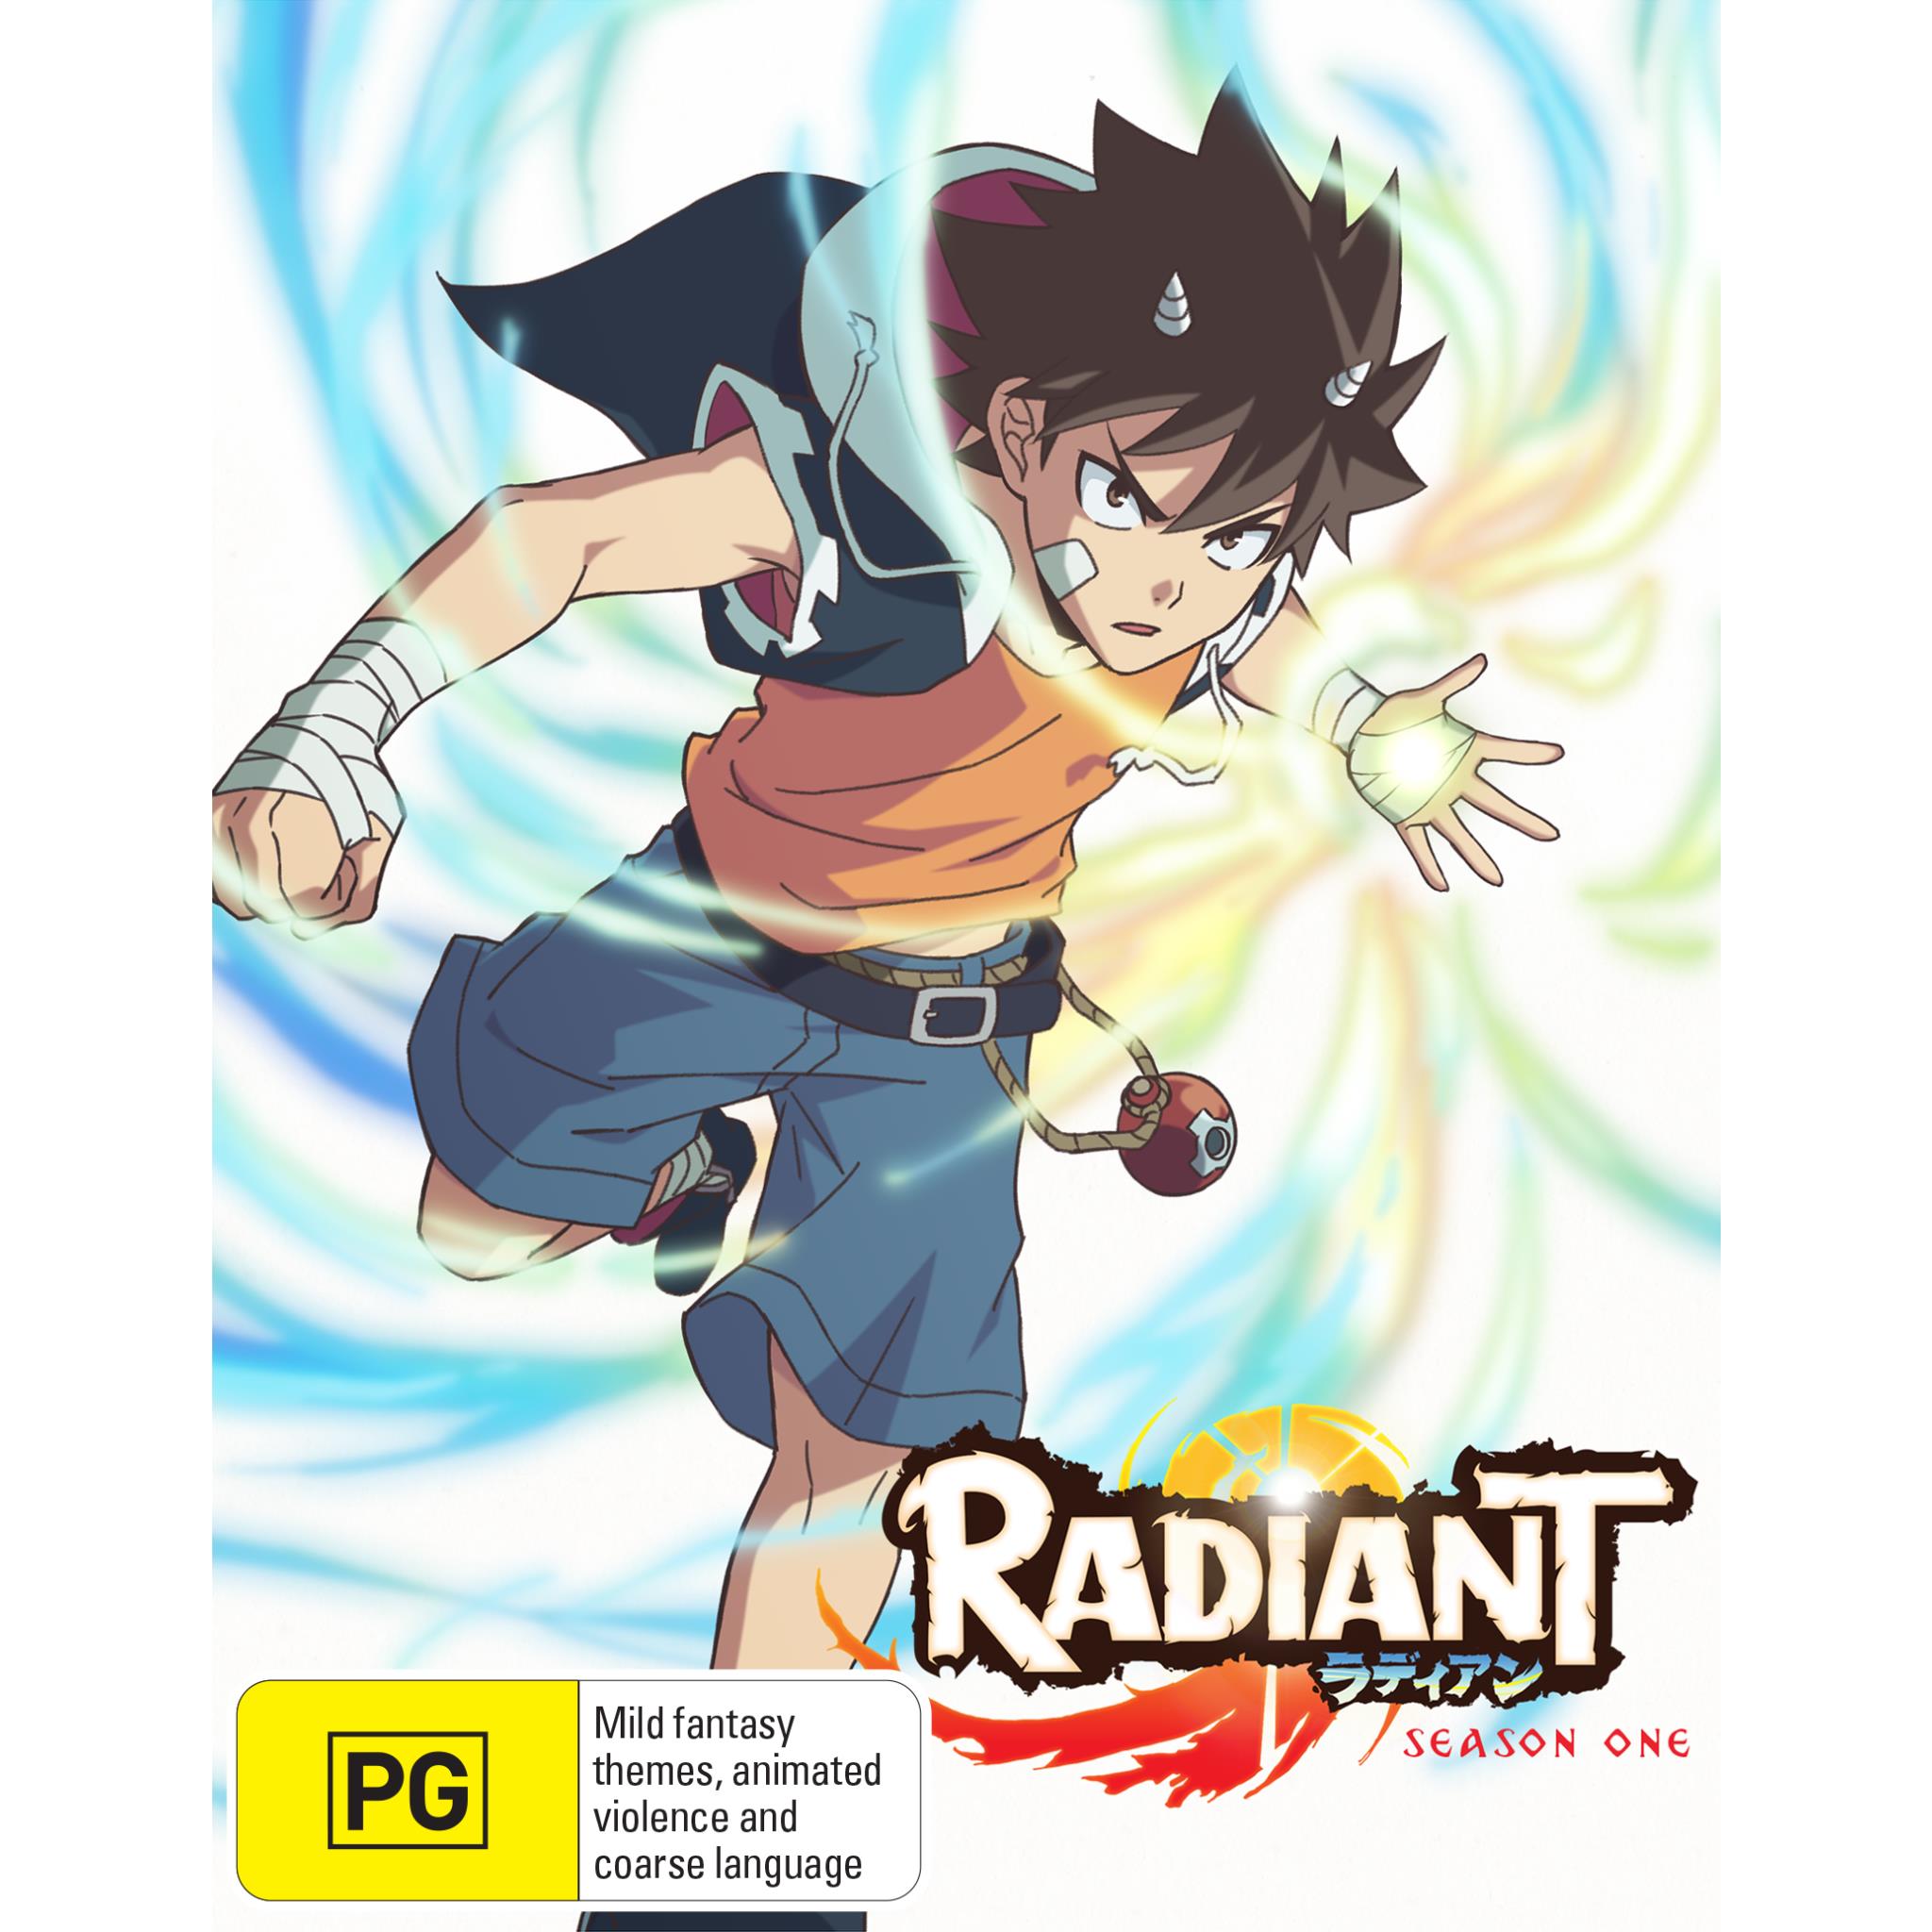 Radiant Season 1 - watch full episodes streaming online